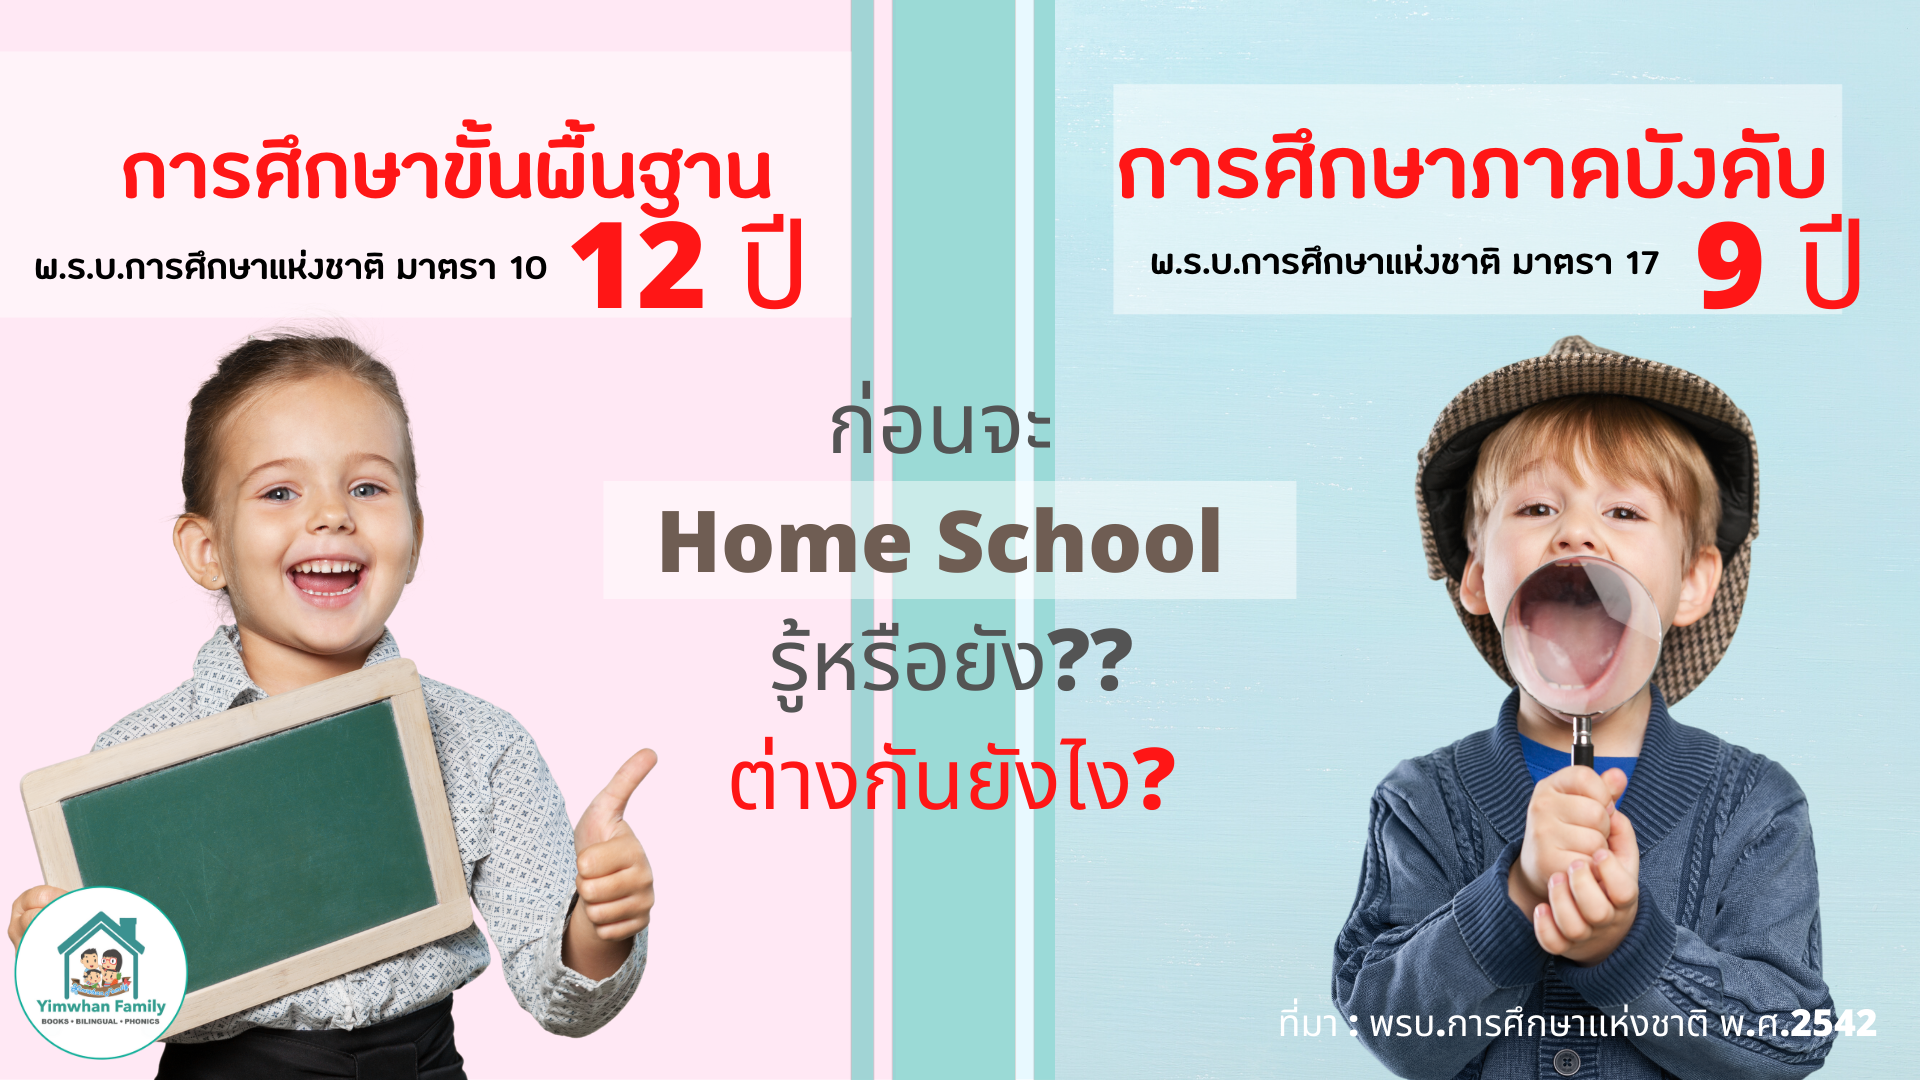 Thailand Education